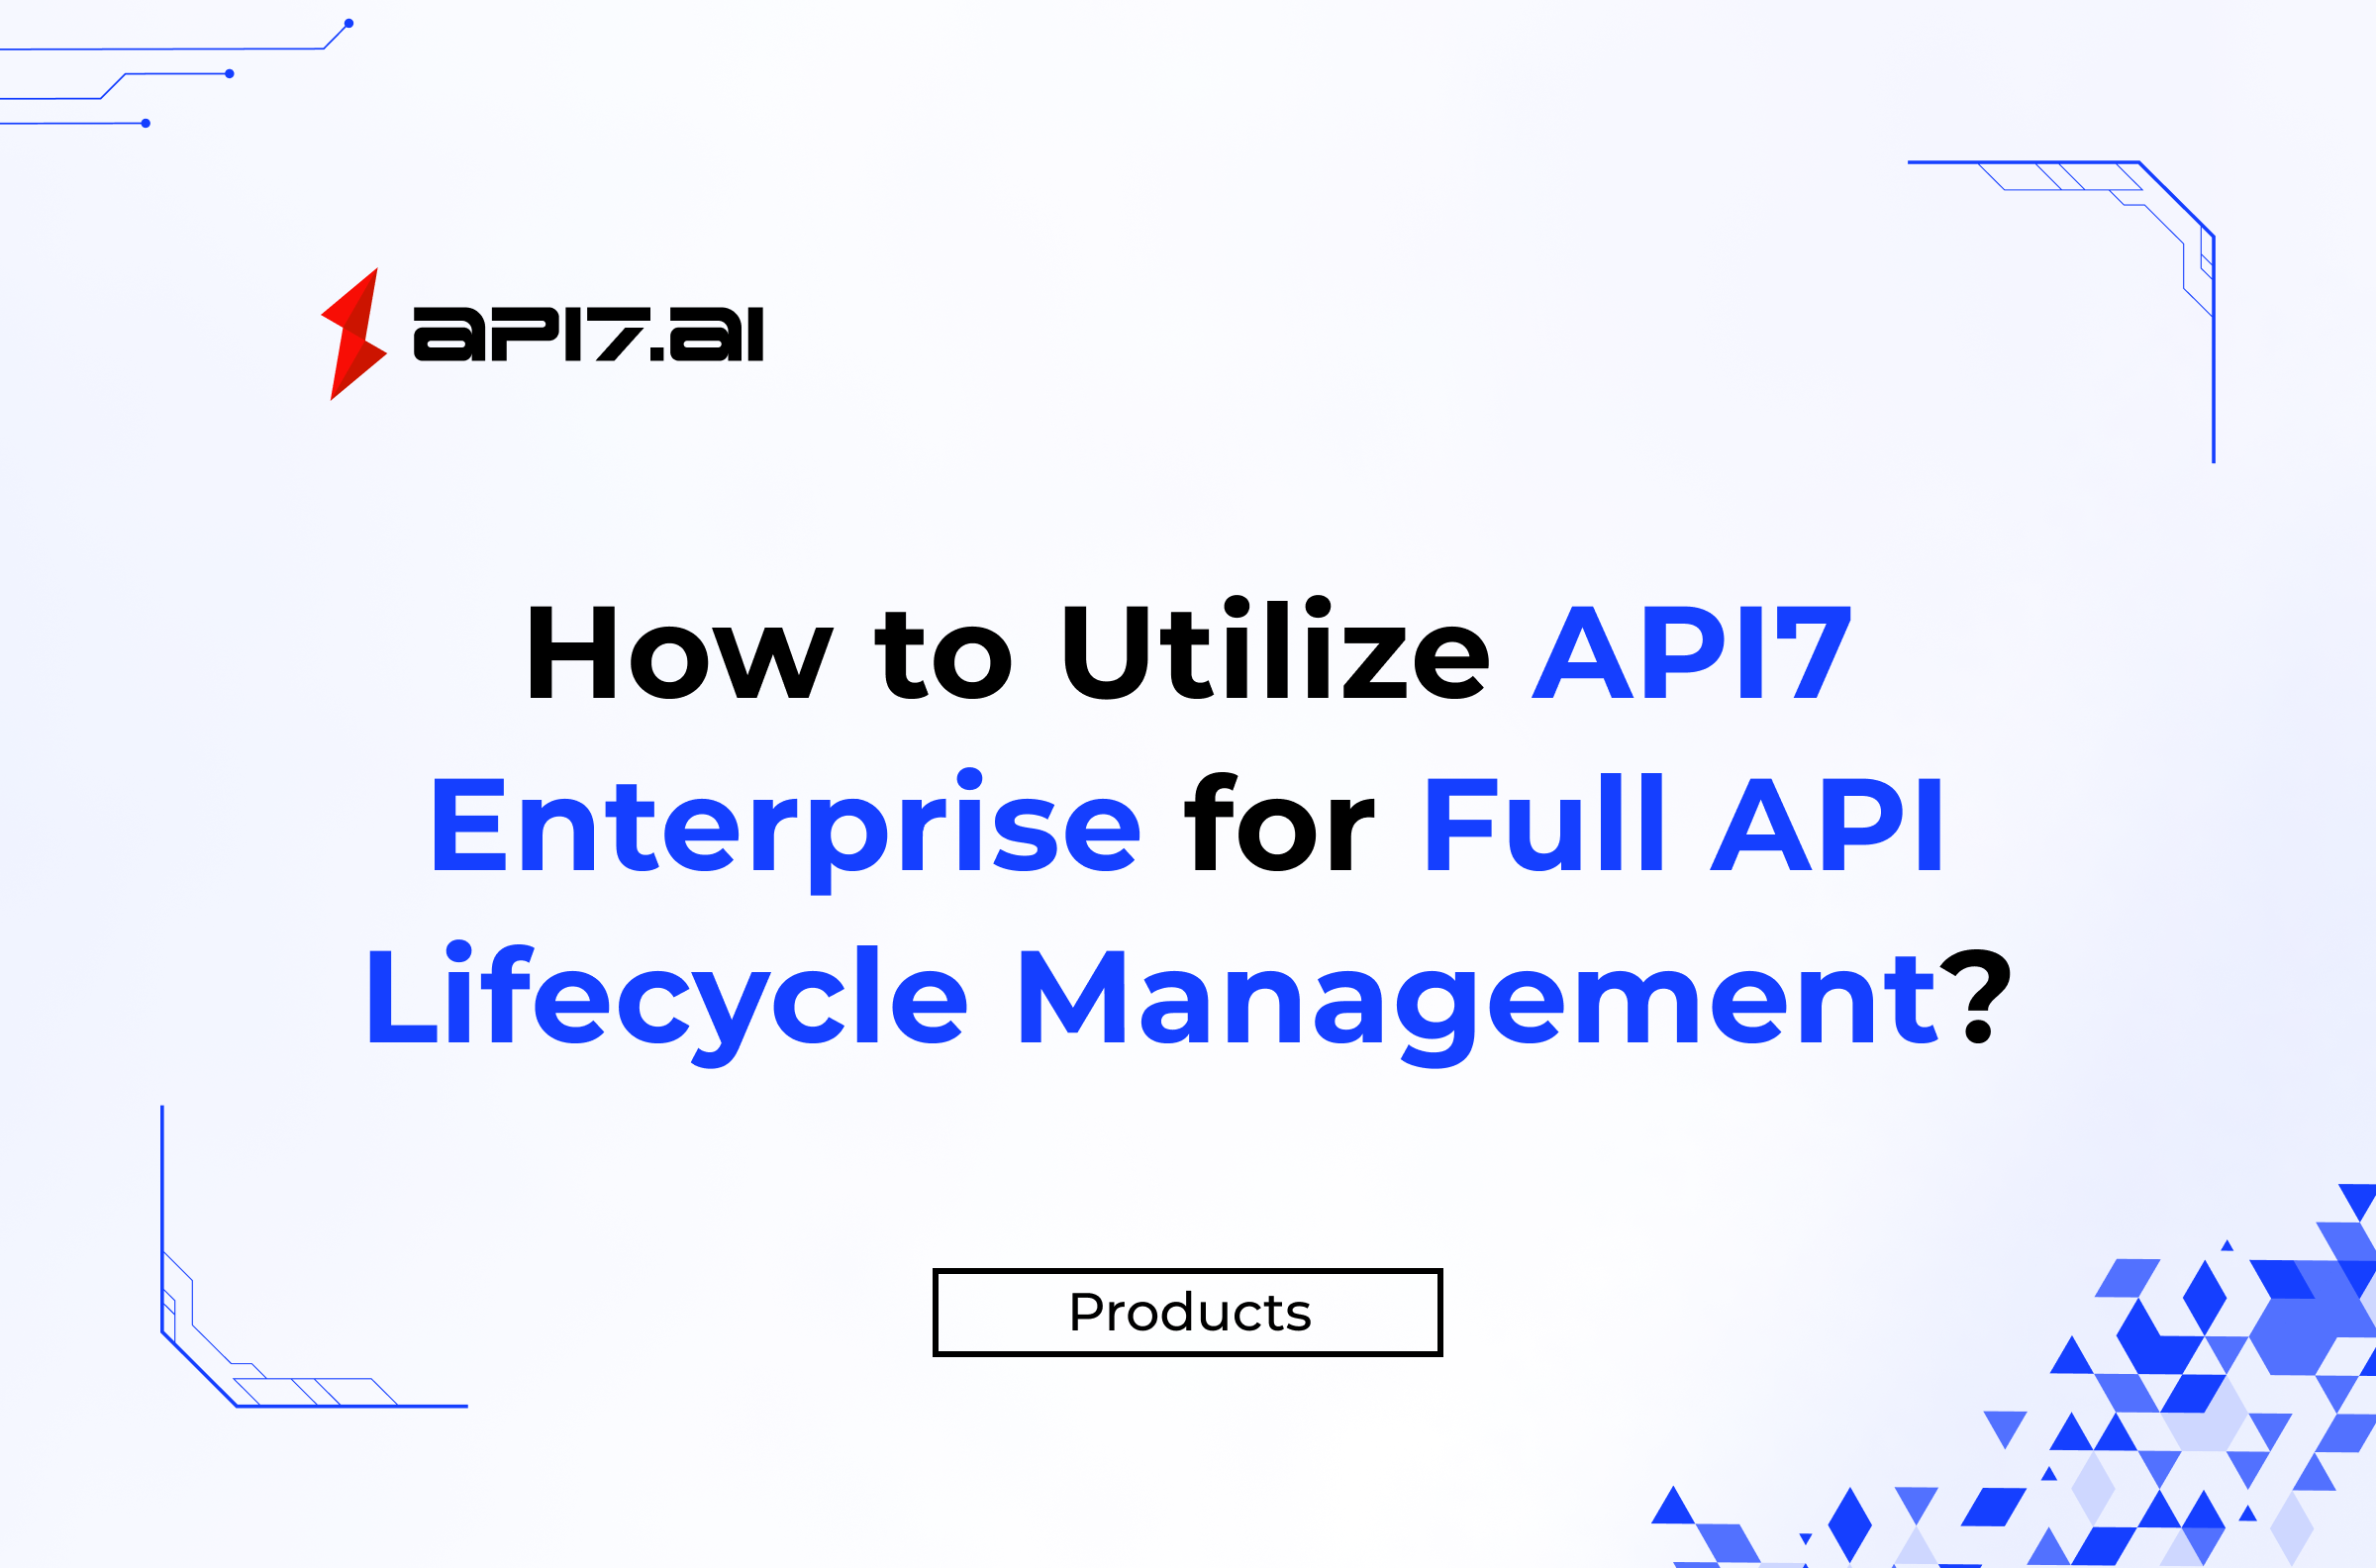 How to Utilize API7 Enterprise for Full API Lifecycle Management?